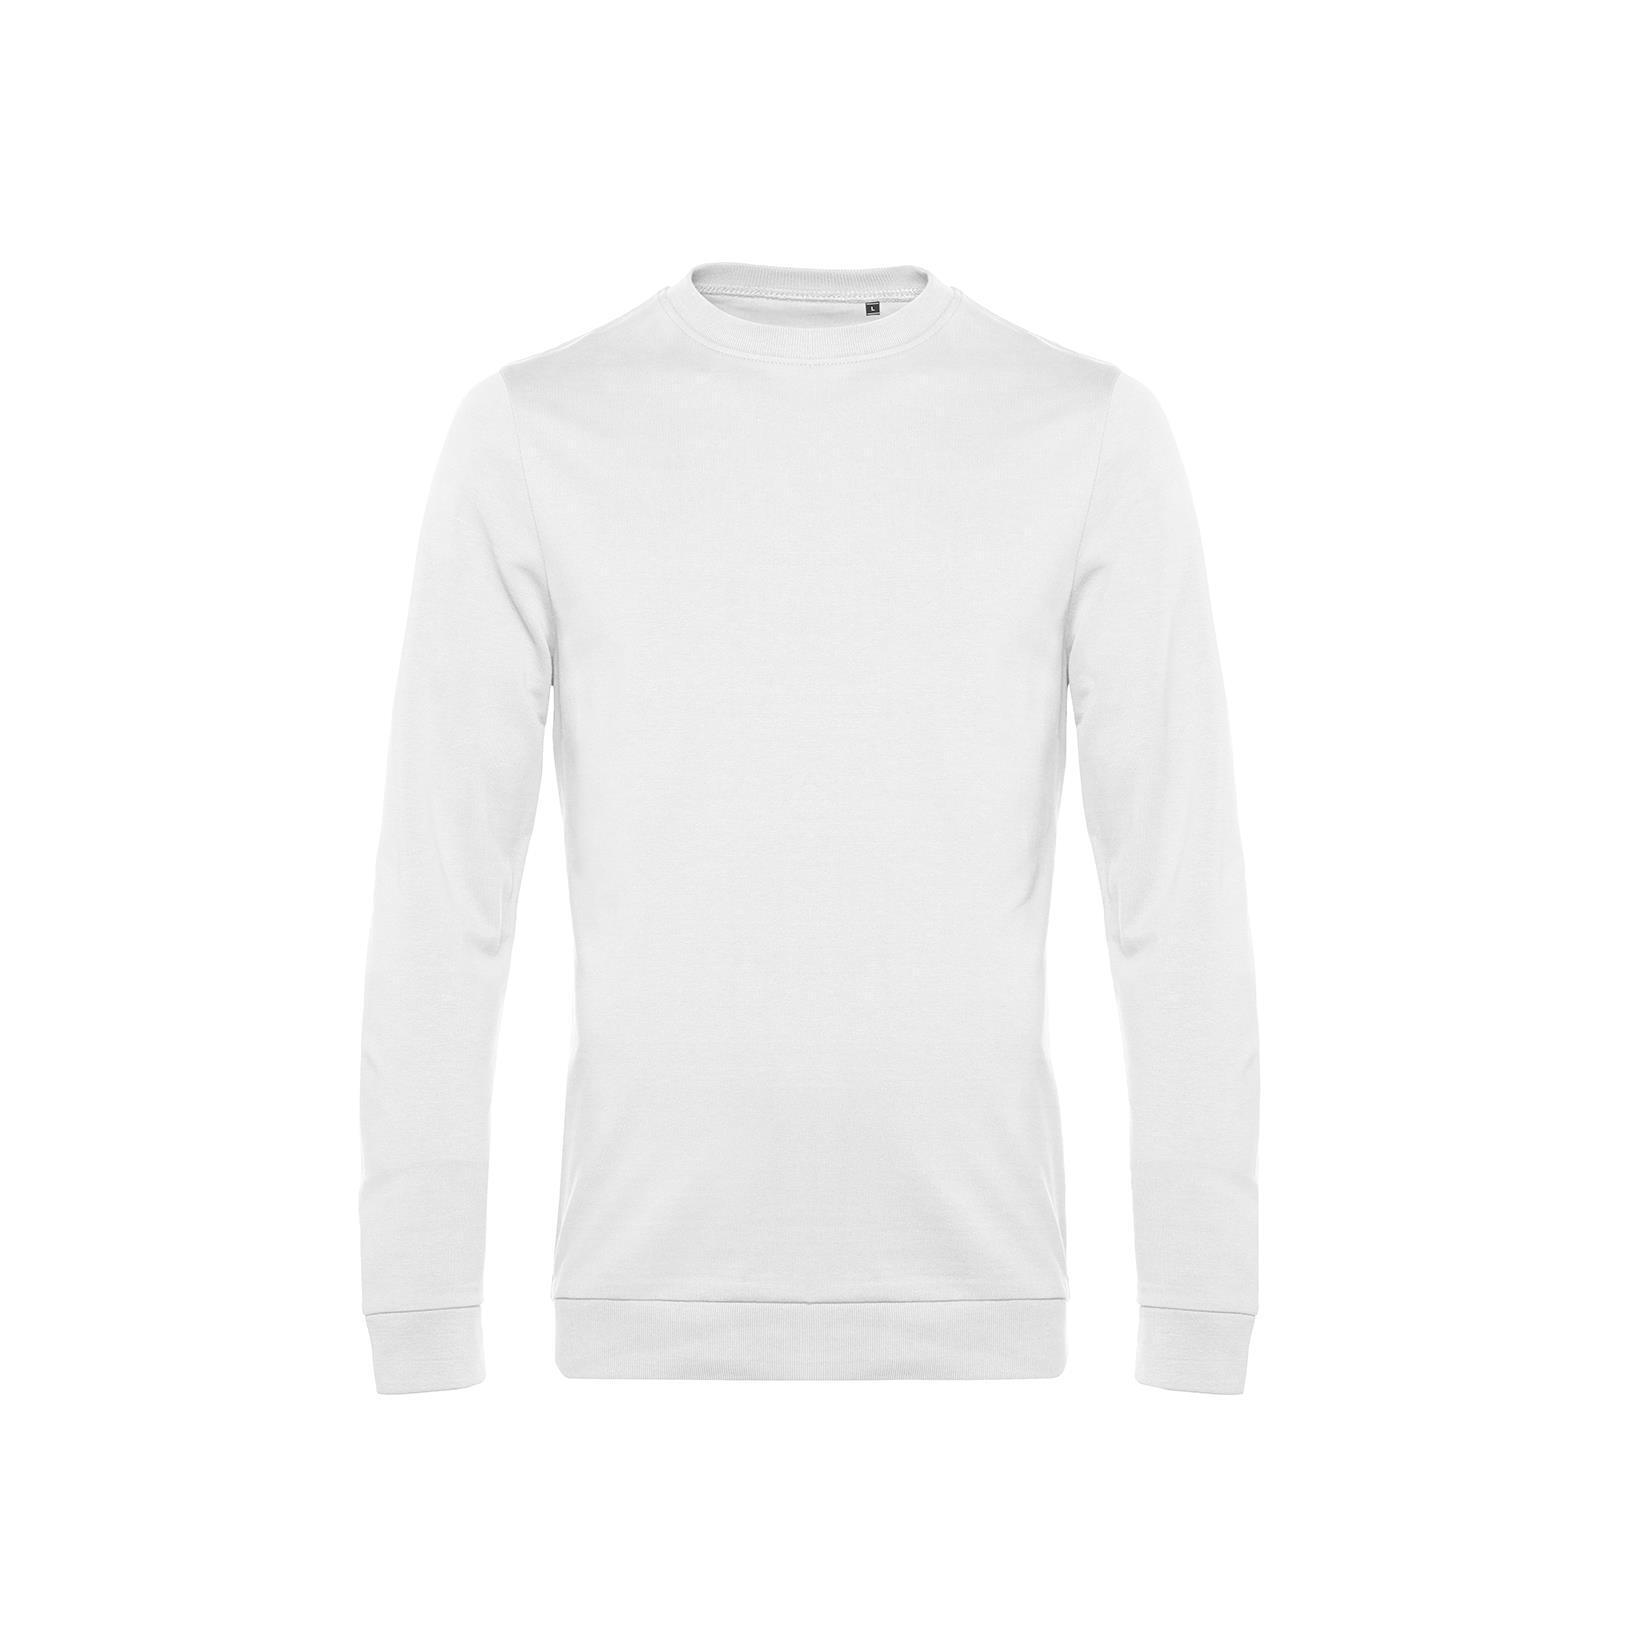 Witte Trendy Sweater sweatshirt trui 